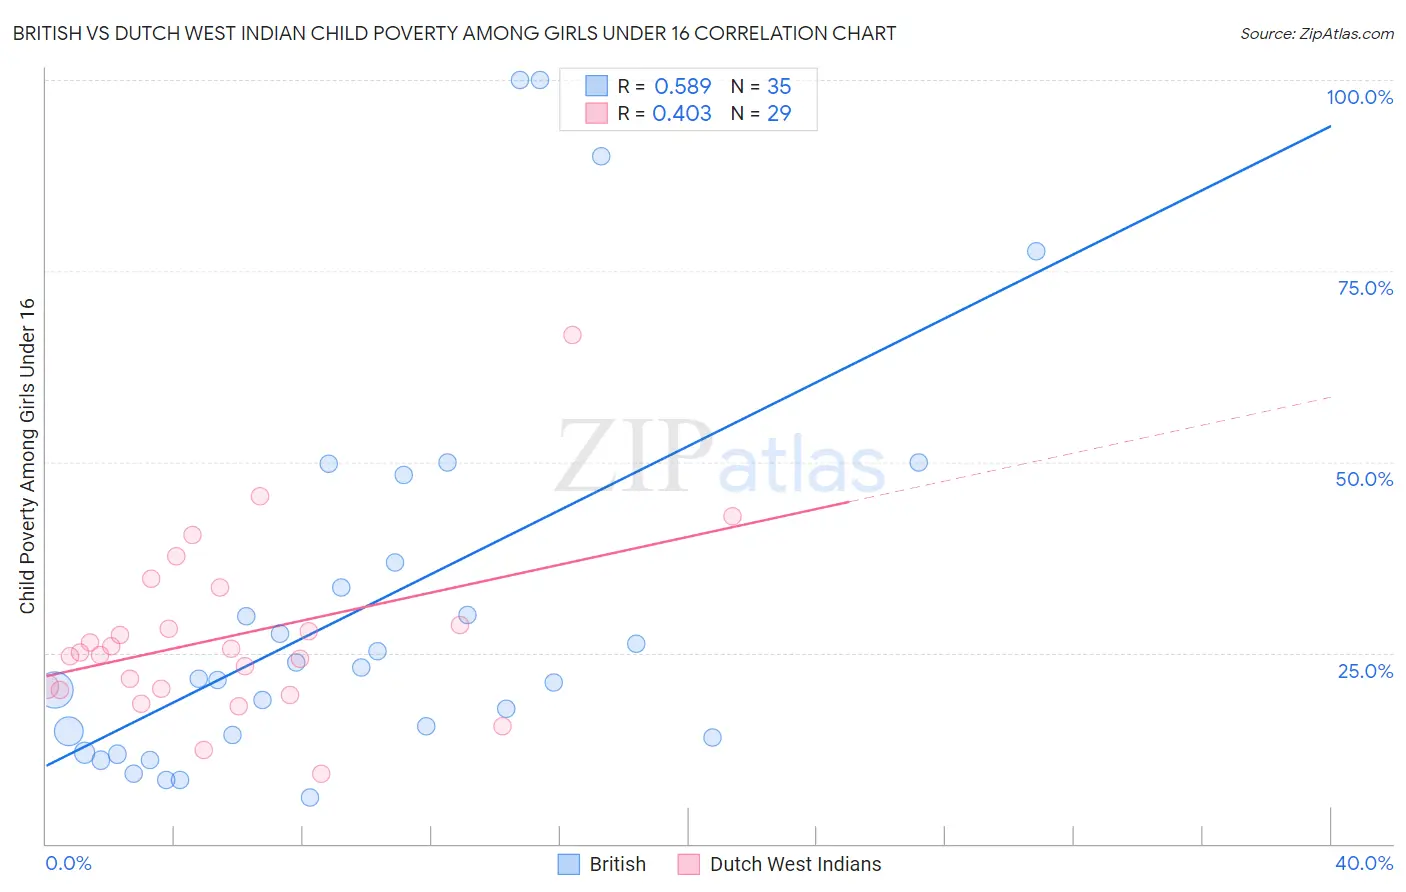 British vs Dutch West Indian Child Poverty Among Girls Under 16